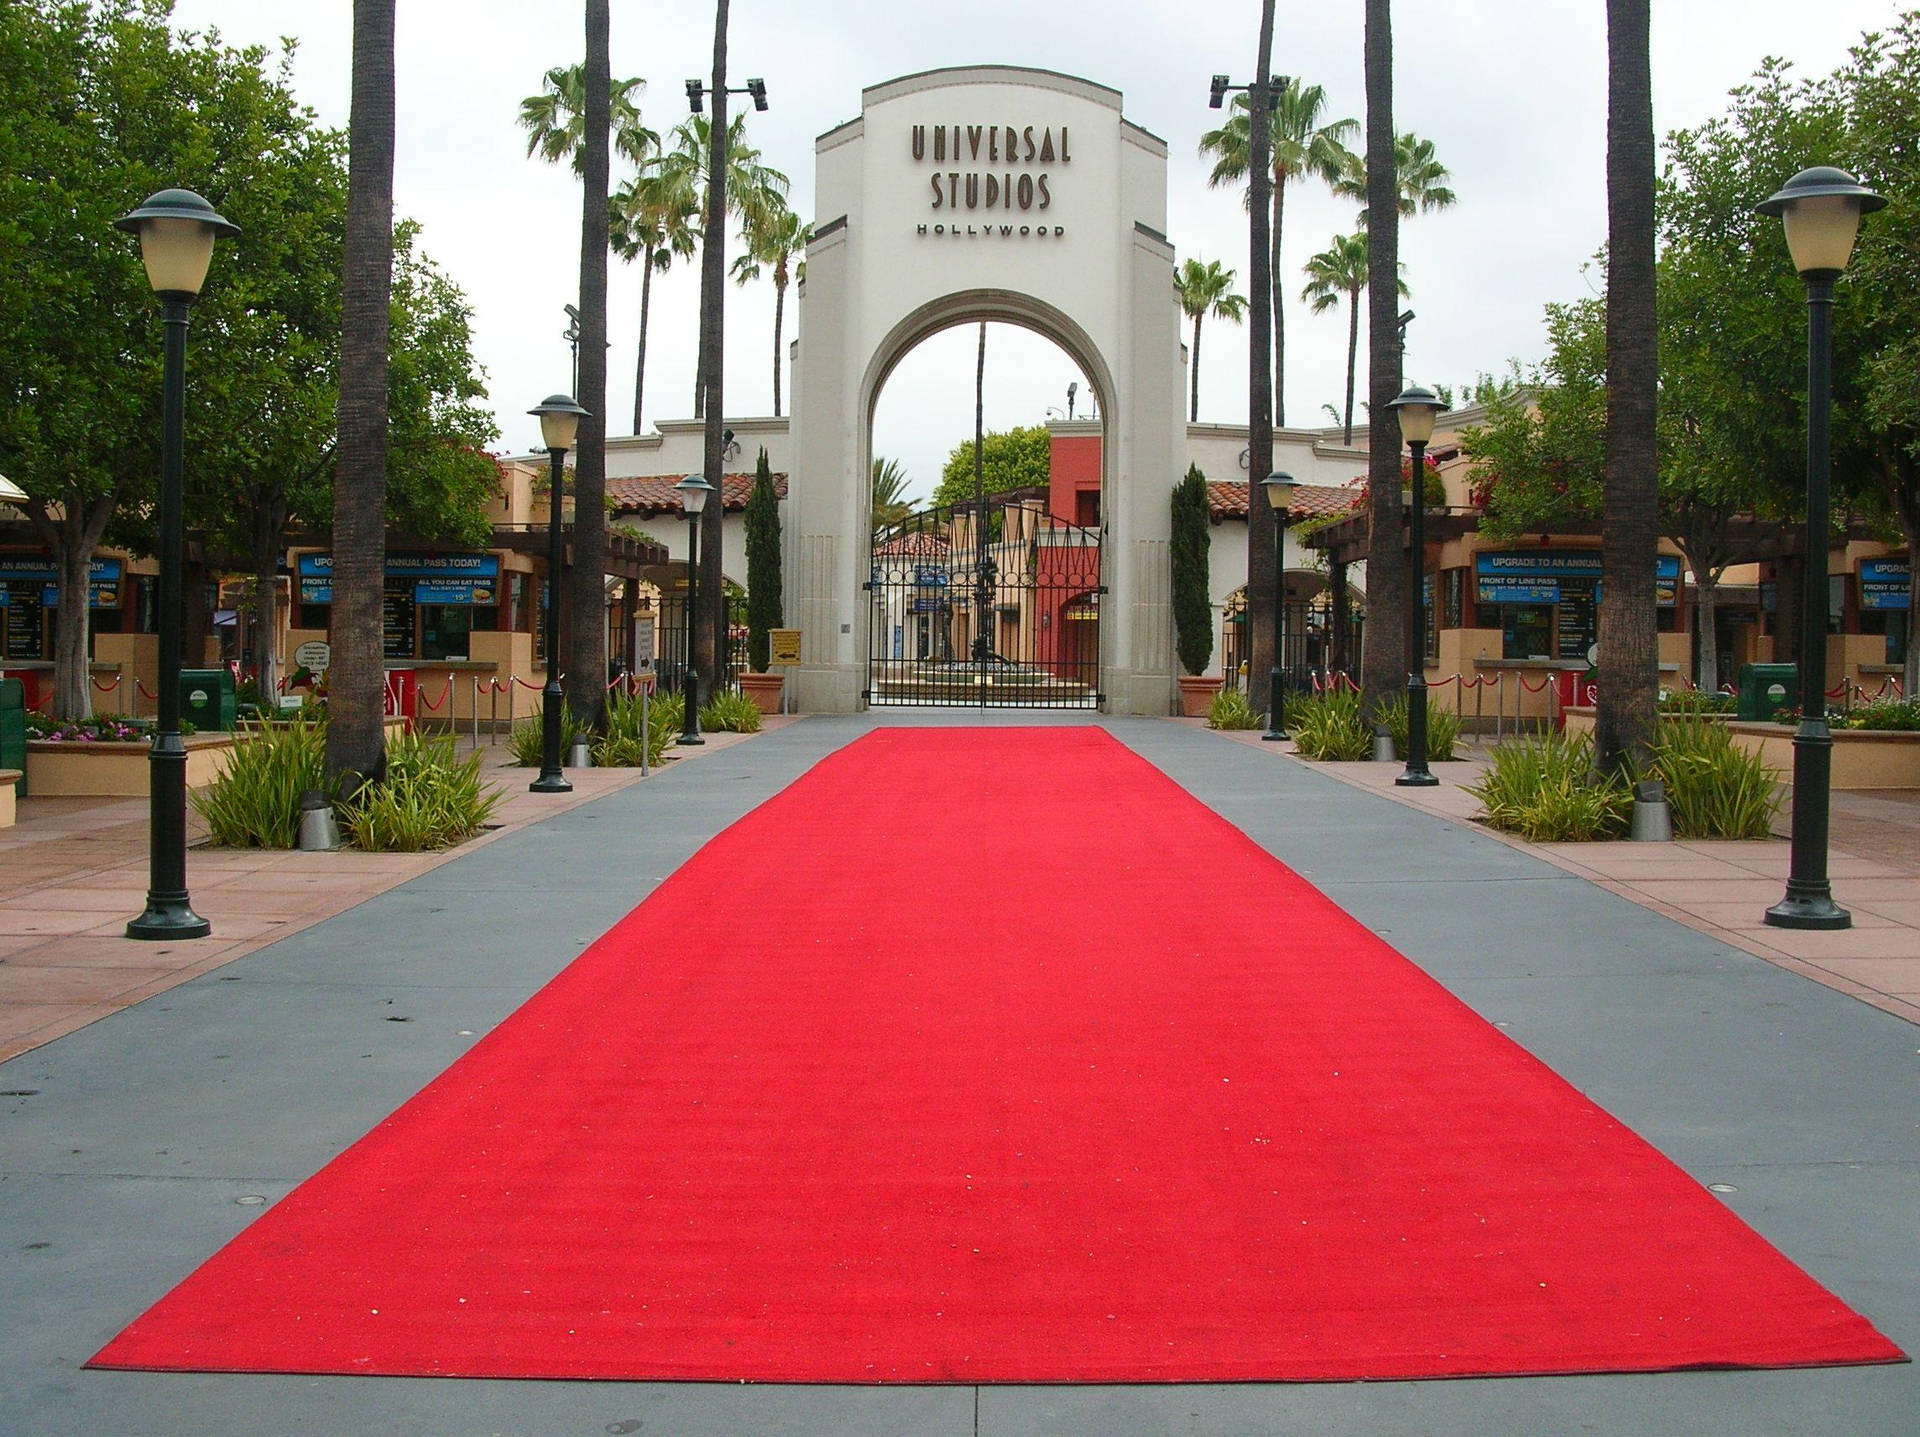 Universal Studios Red Carpet